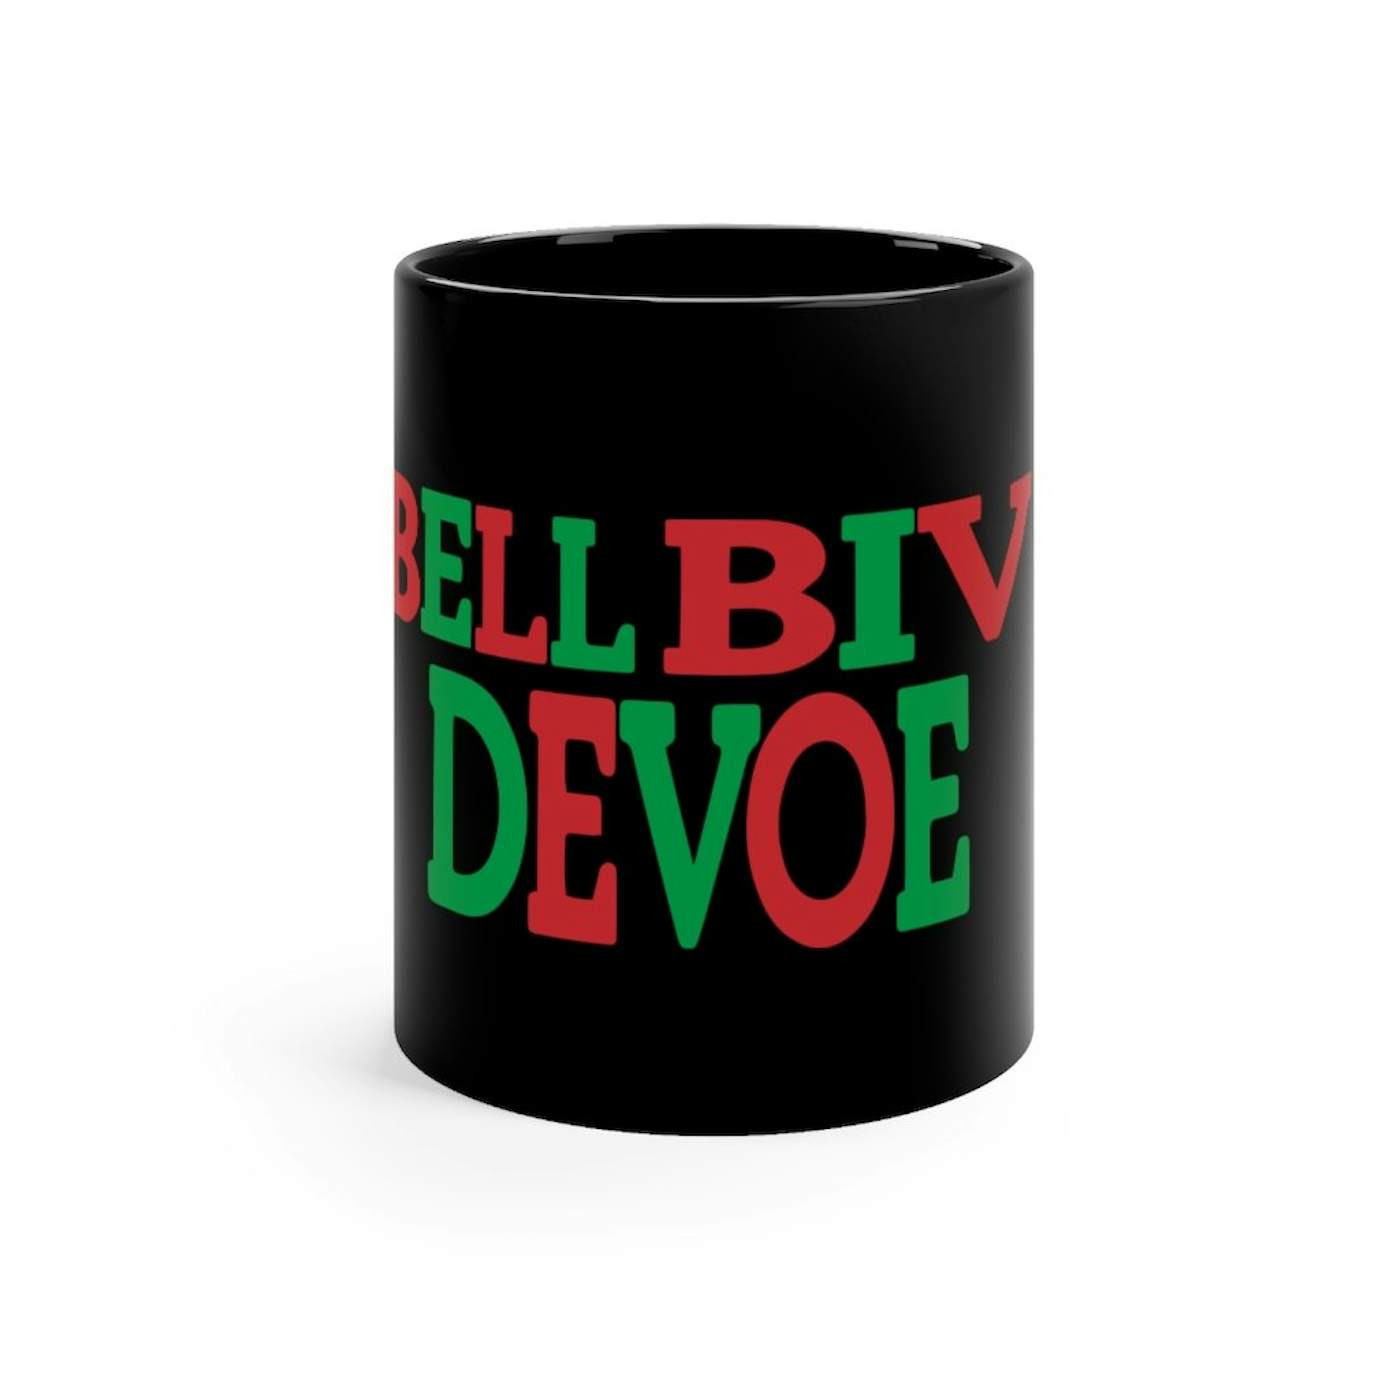 Bell Biv DeVoe Red and Green Logo Mug